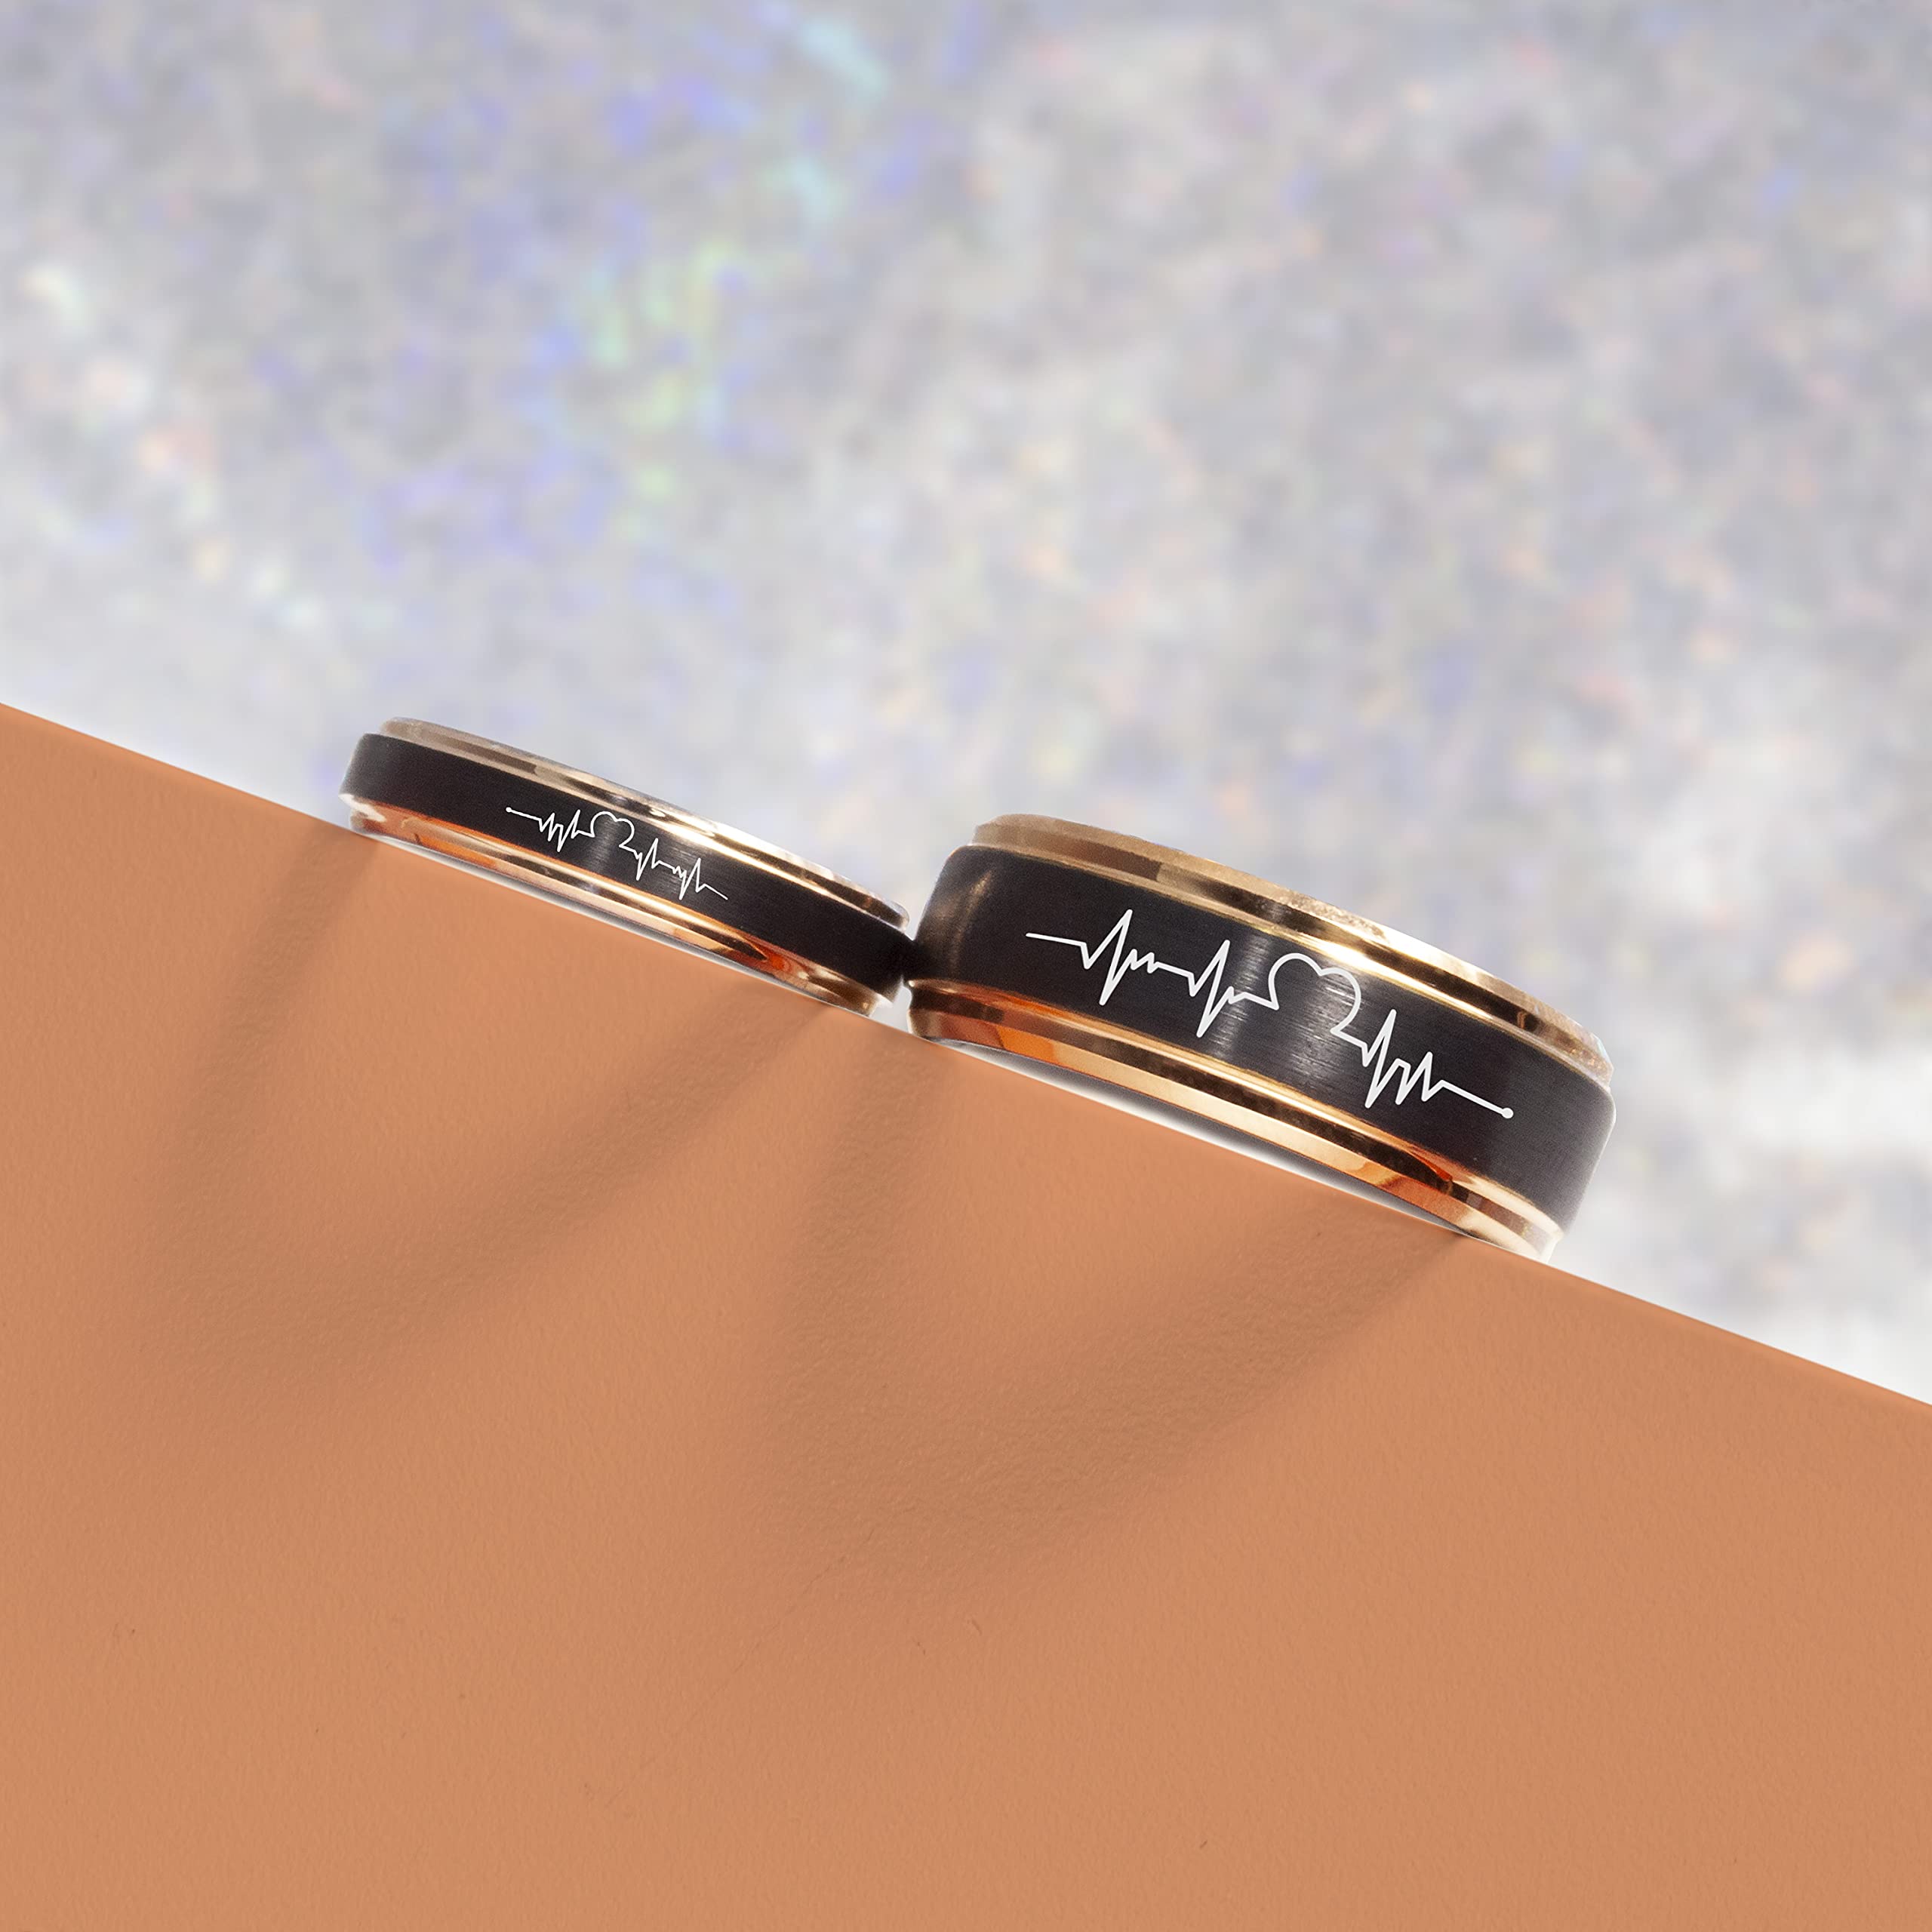 LerchPhi 4MM 6MM 8MM Custom Tungsten Carbide Ring, Custom Engraved Promise Wedding Ring, 18K Rose Gold Stepped Edge with Black Matte Satin Finish